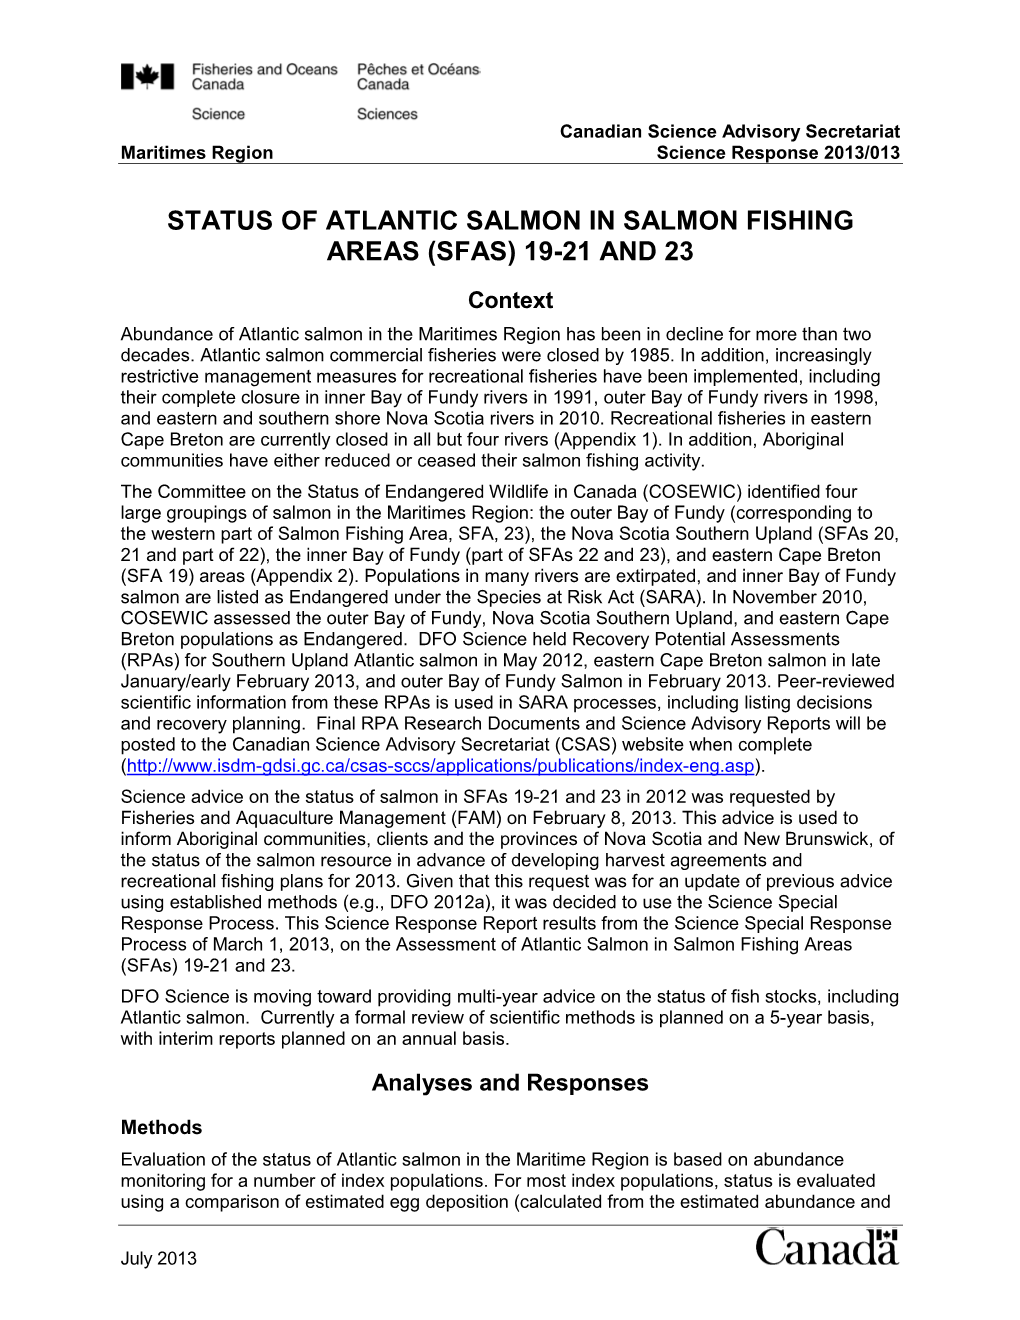 Status of Atlantic Salmon in Salmon Fishing Areas